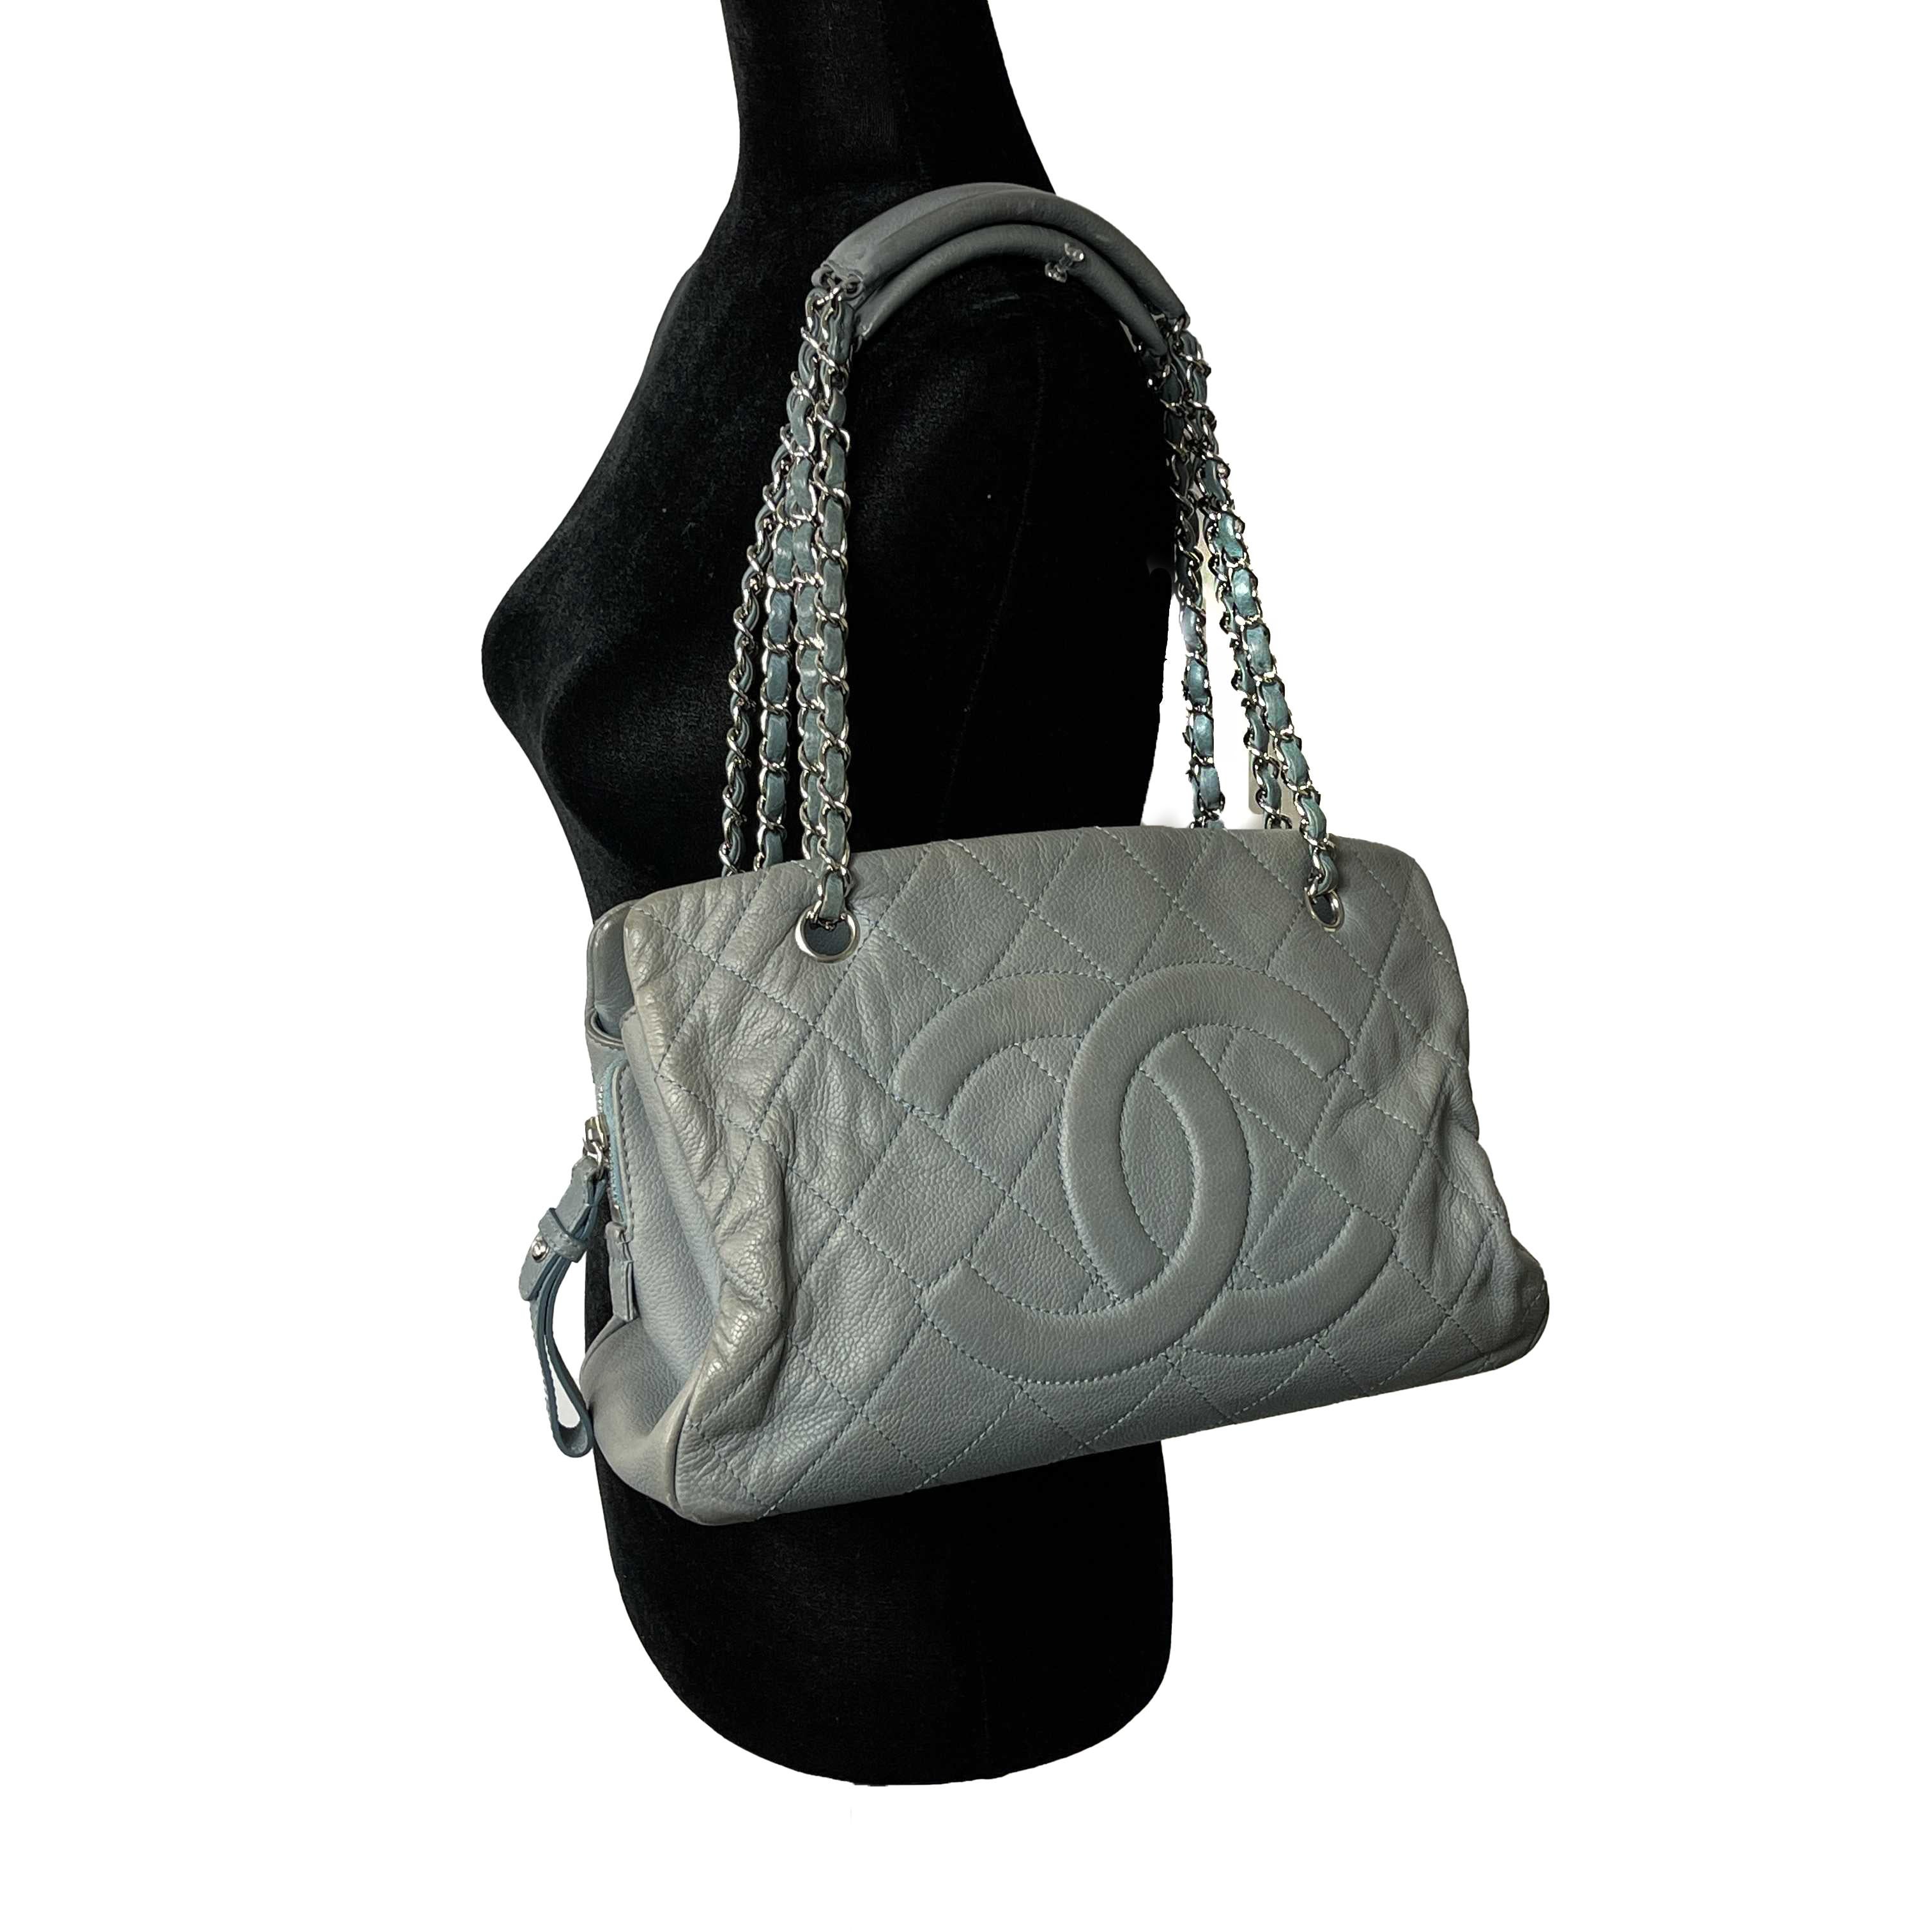 CHANEL  Seafoam / Silver CC Caviar Medium Leather Shopping Tote / Shoulder Bag For Sale 7